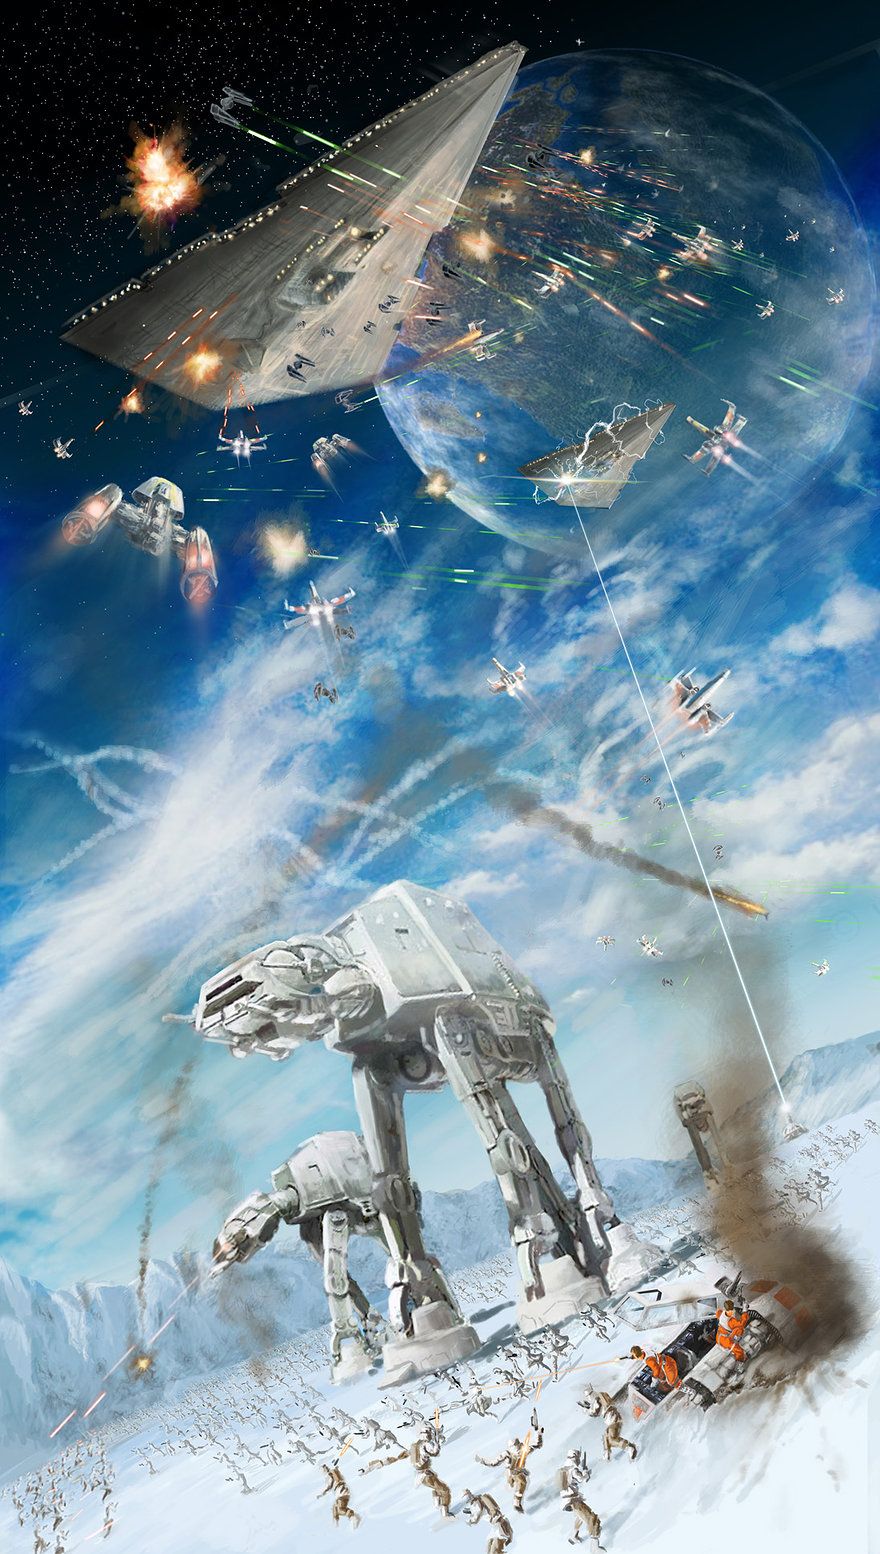 Battlefield Hoth Wars. meanpete at. Star wars artwork, Star wars art, Star wars wallpaper